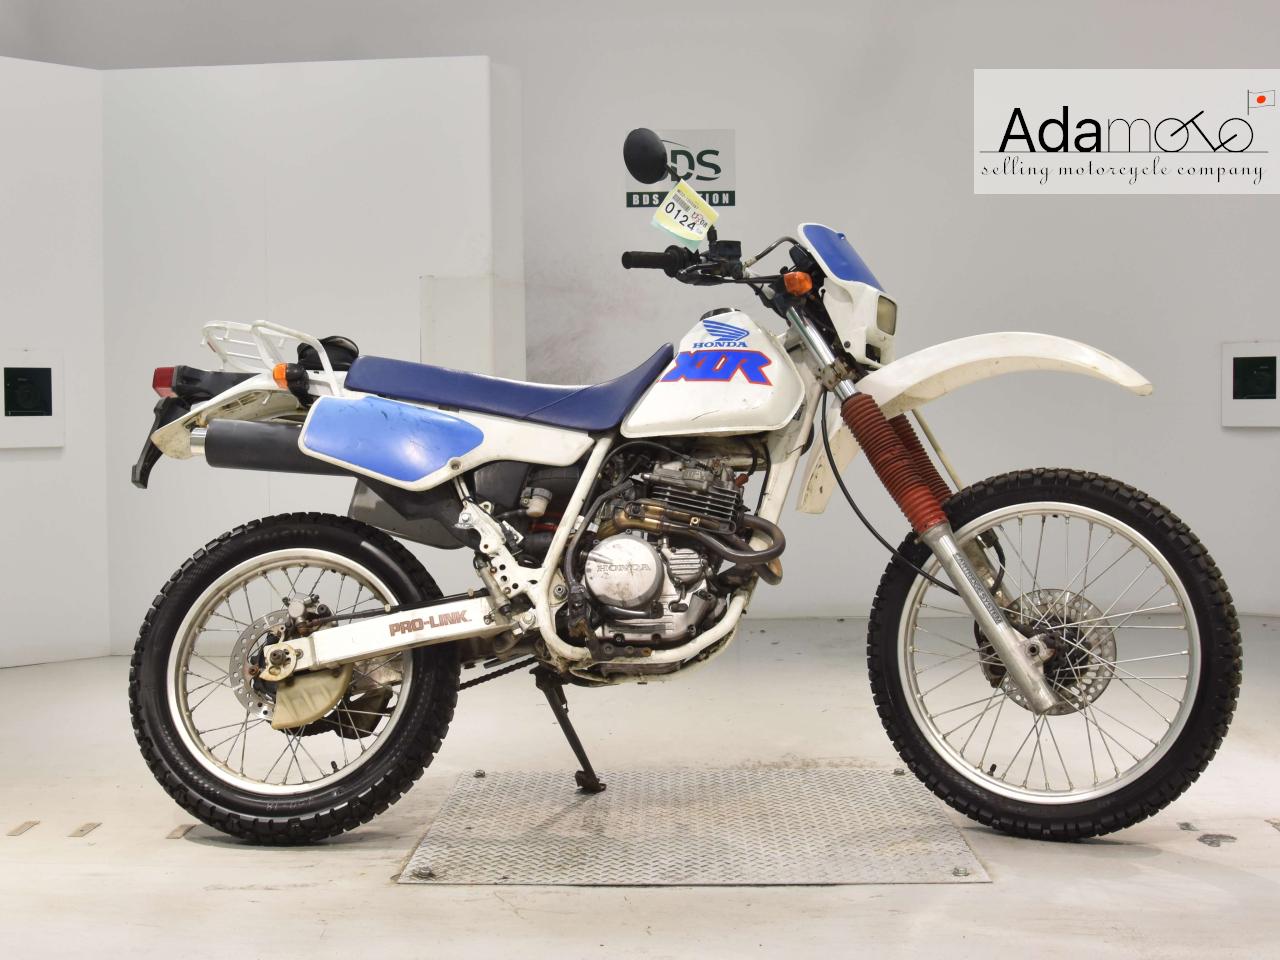 Honda XLR250R 4 - Adamoto - Motorcycles from Japan